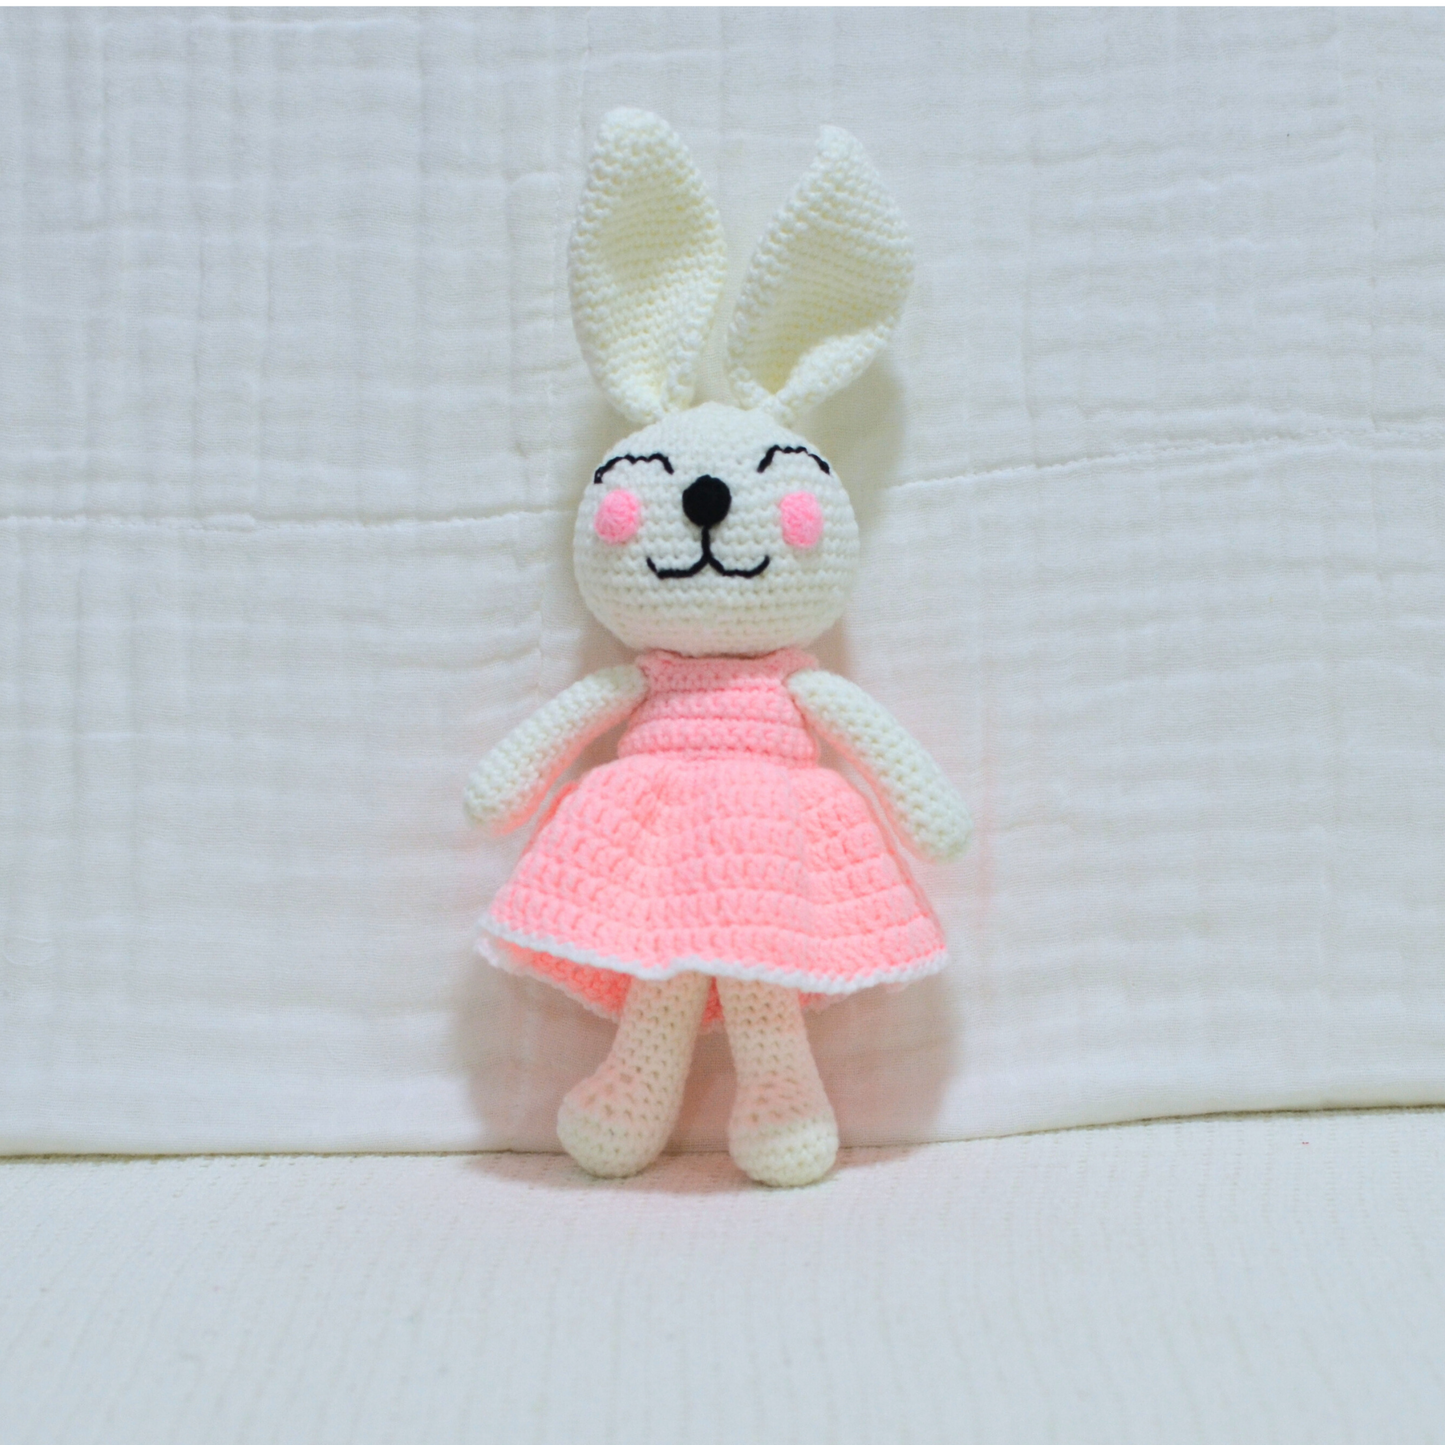 Handmade Crochet Bunny Collection